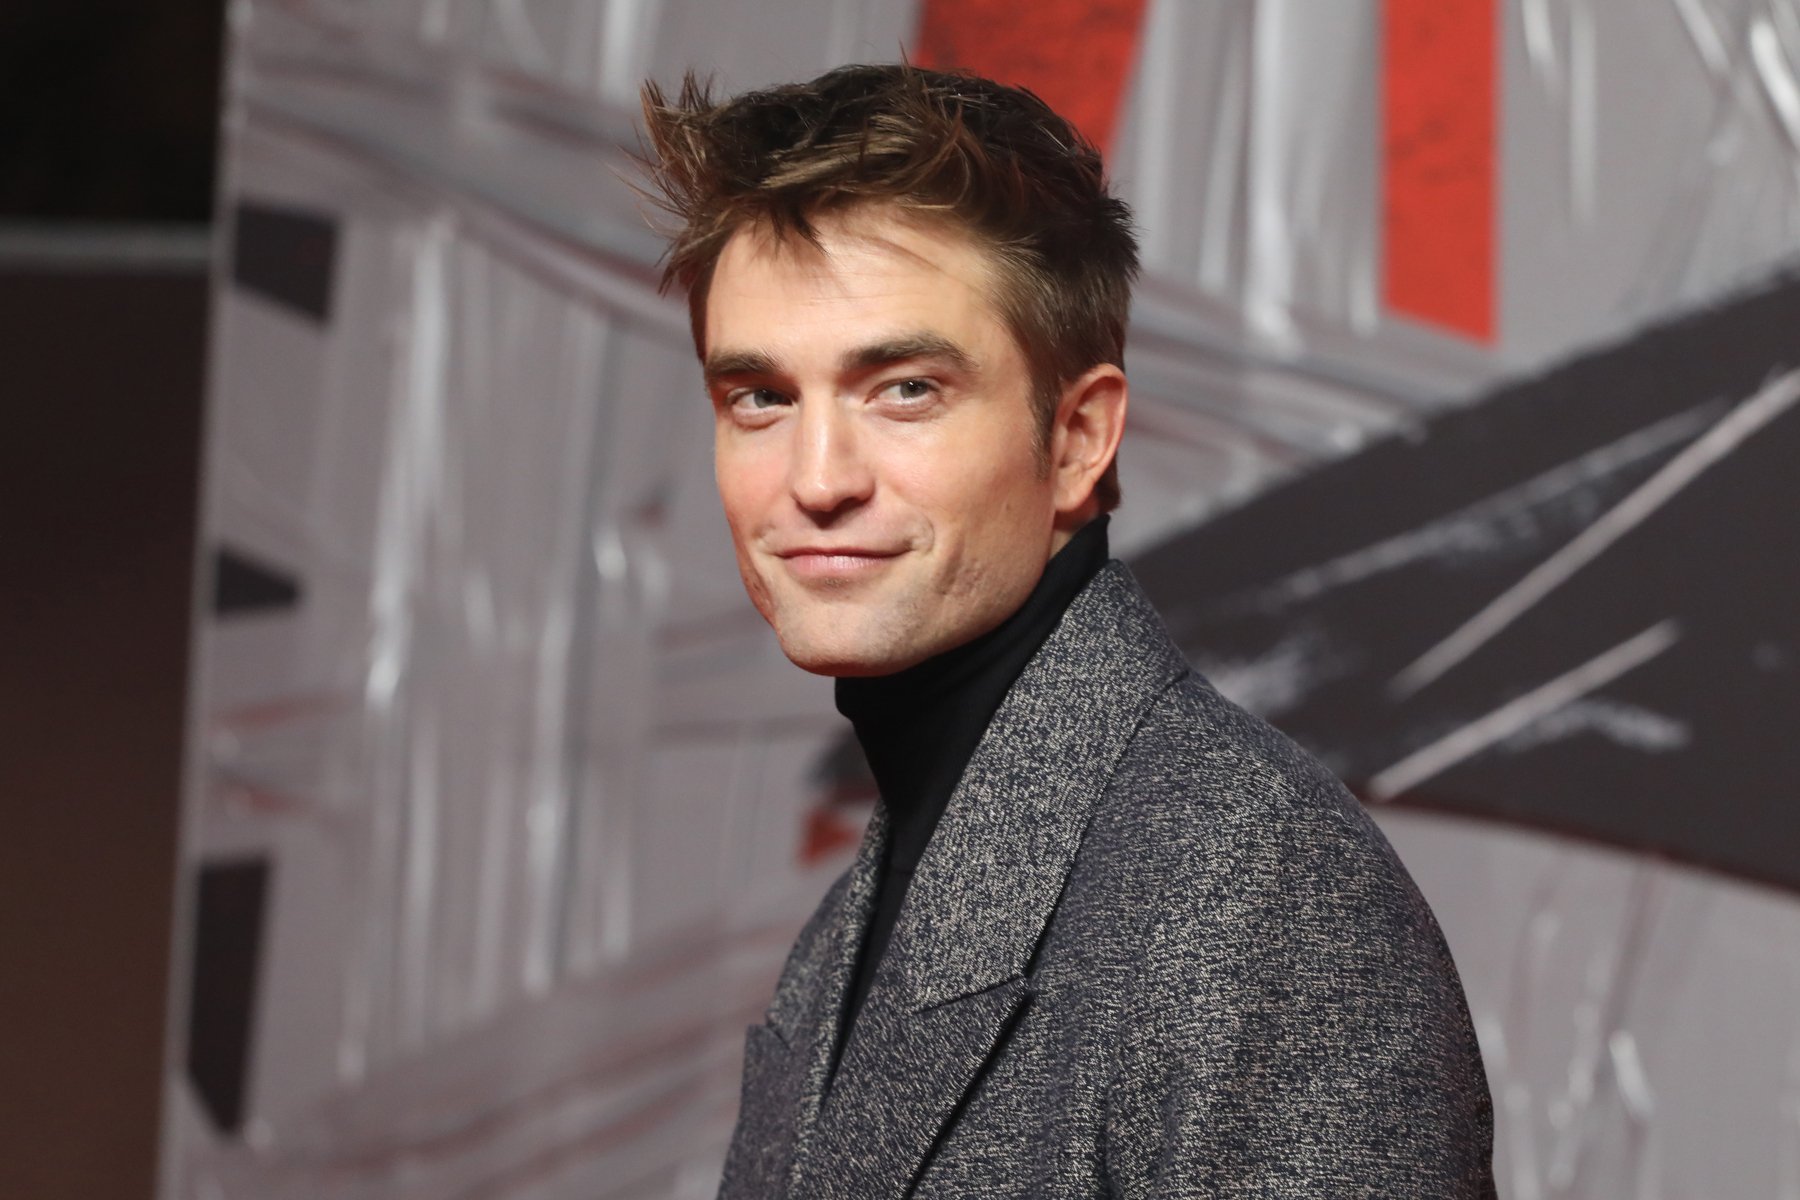 Robert Pattinson at a screening of 'The Batman.' He's wearing a long grey coat and smiling.